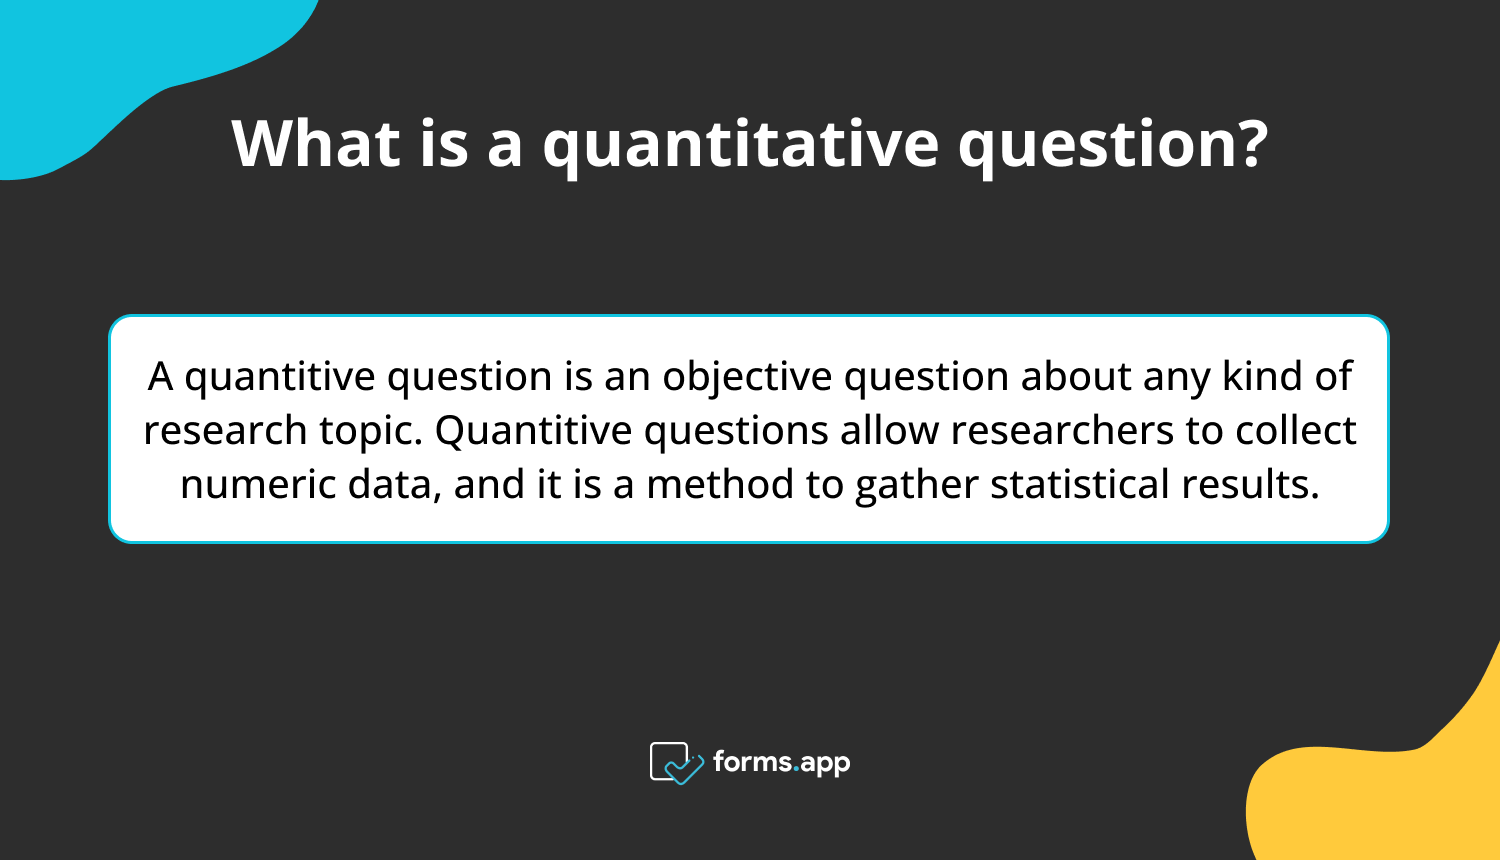 The definition of a quantitative question